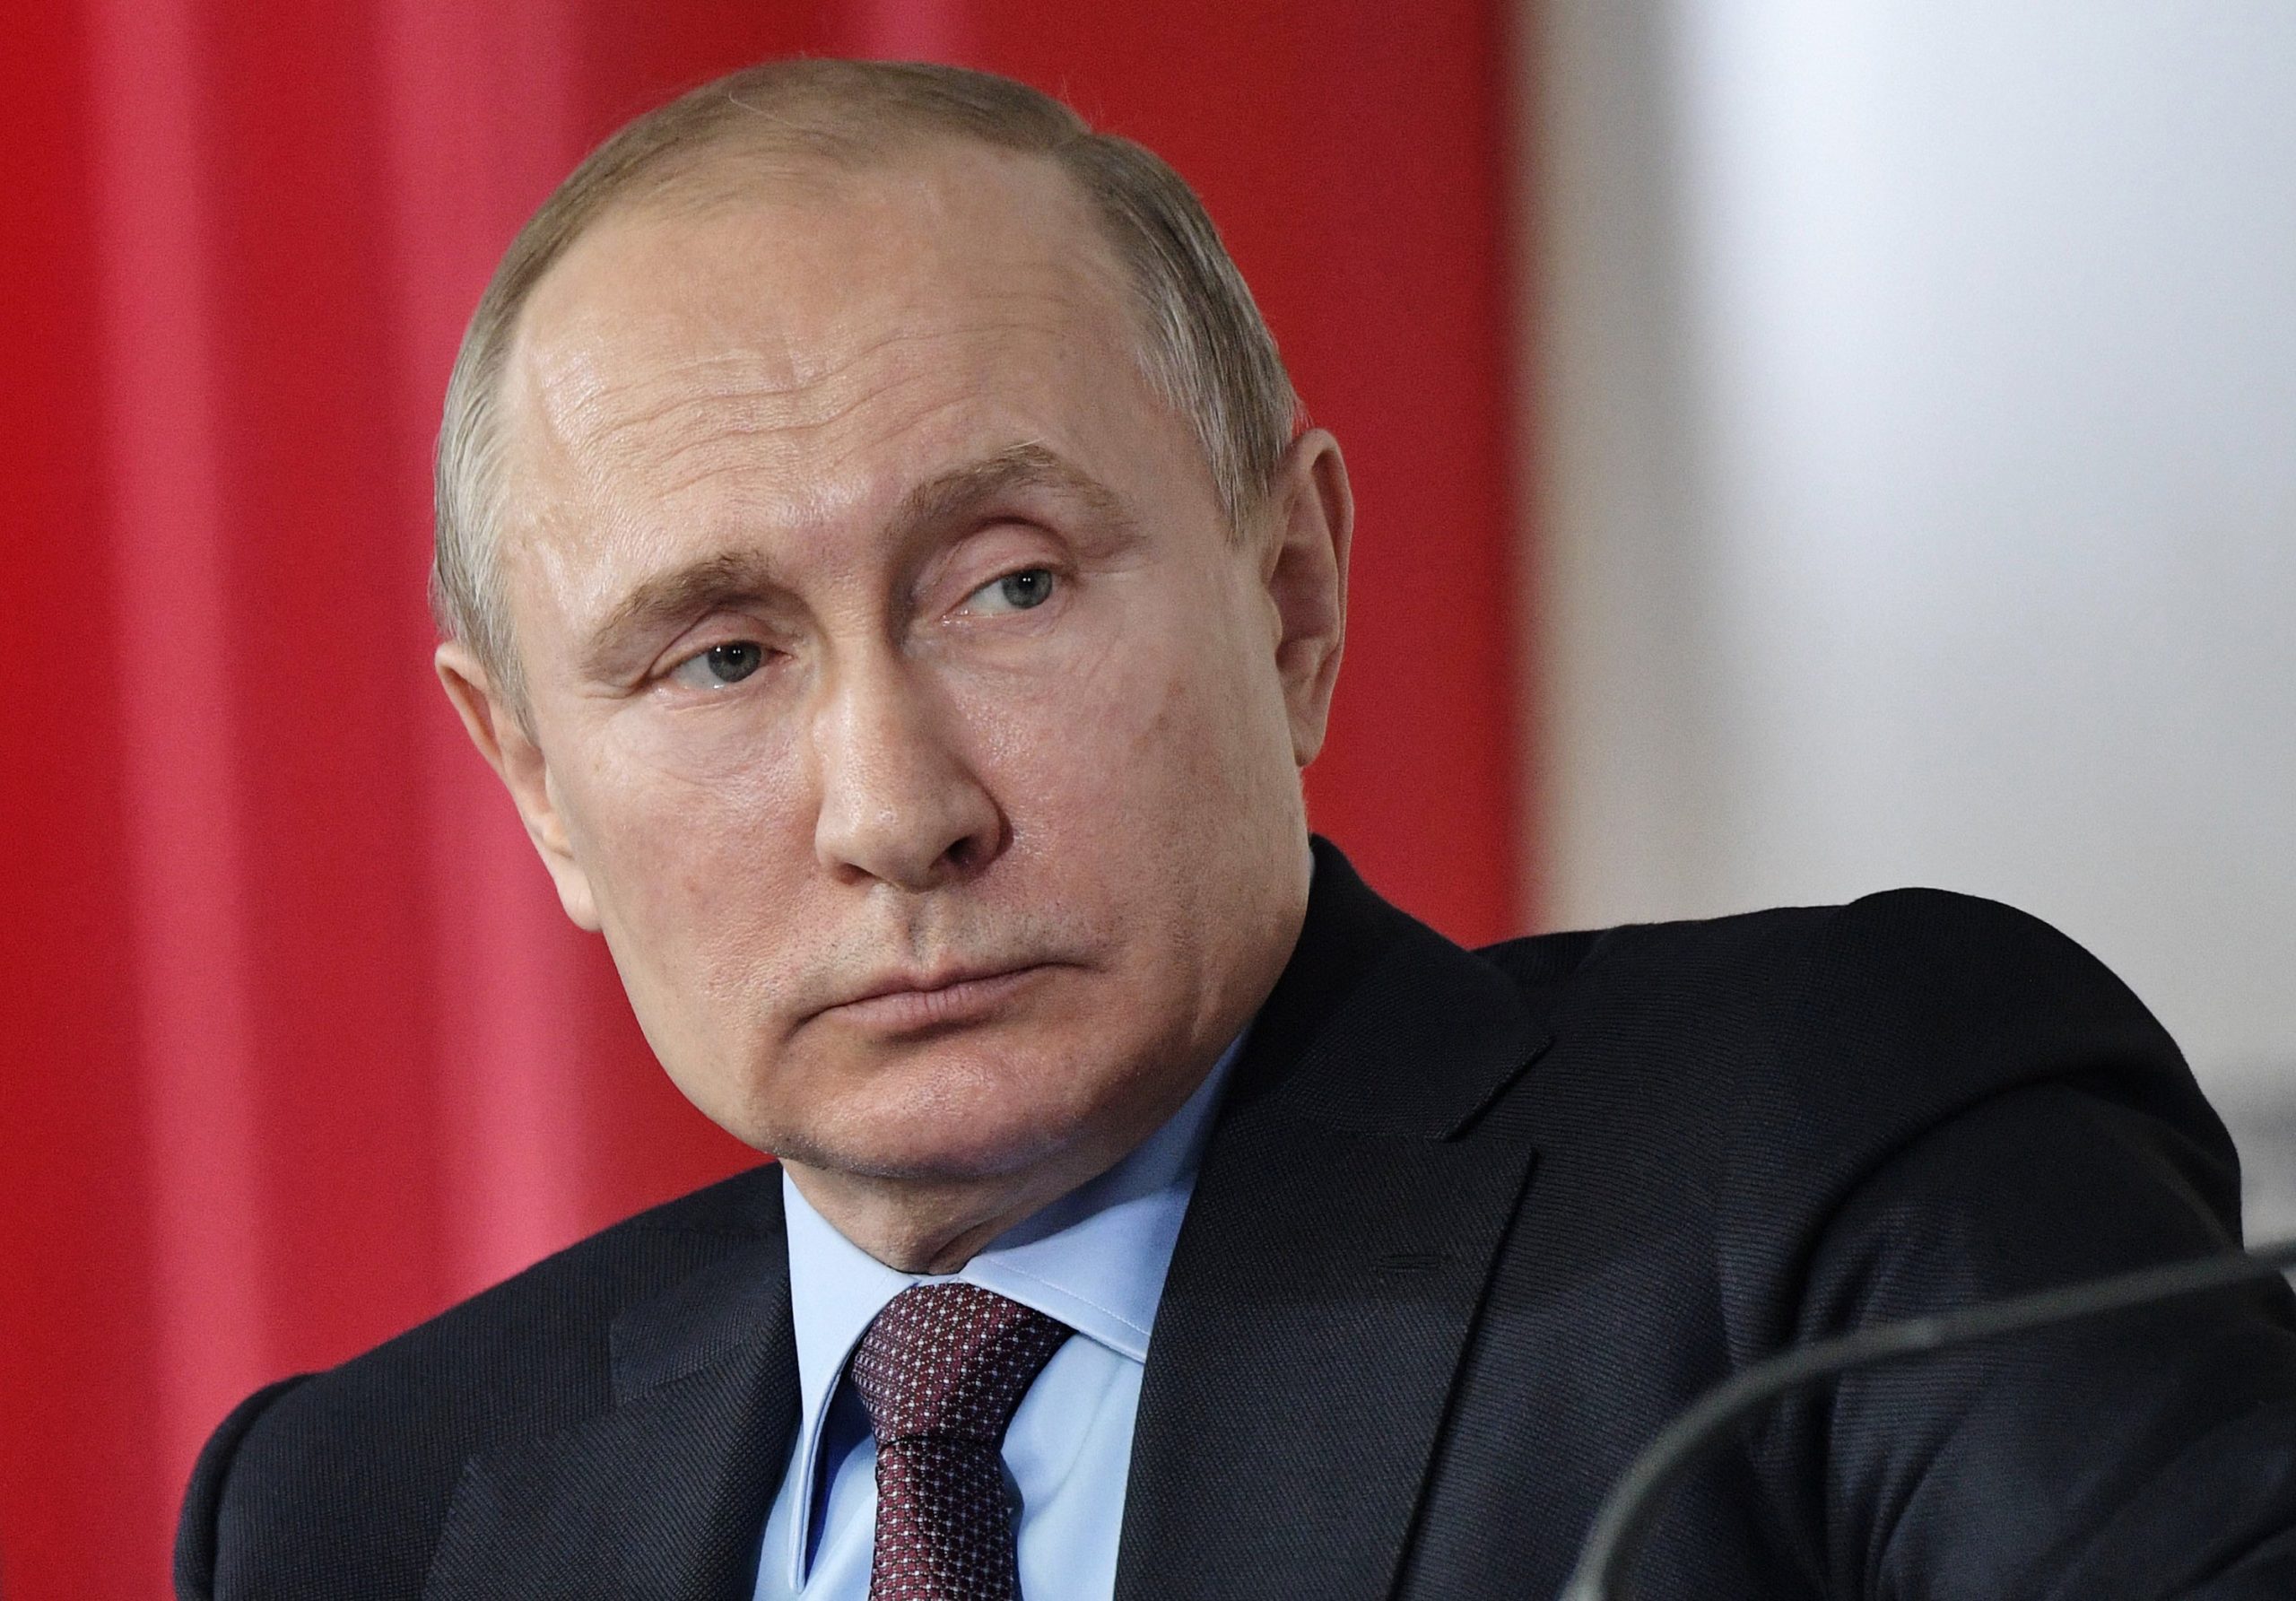 Allow Russia Compete Despite Doping Ban, Putin Says